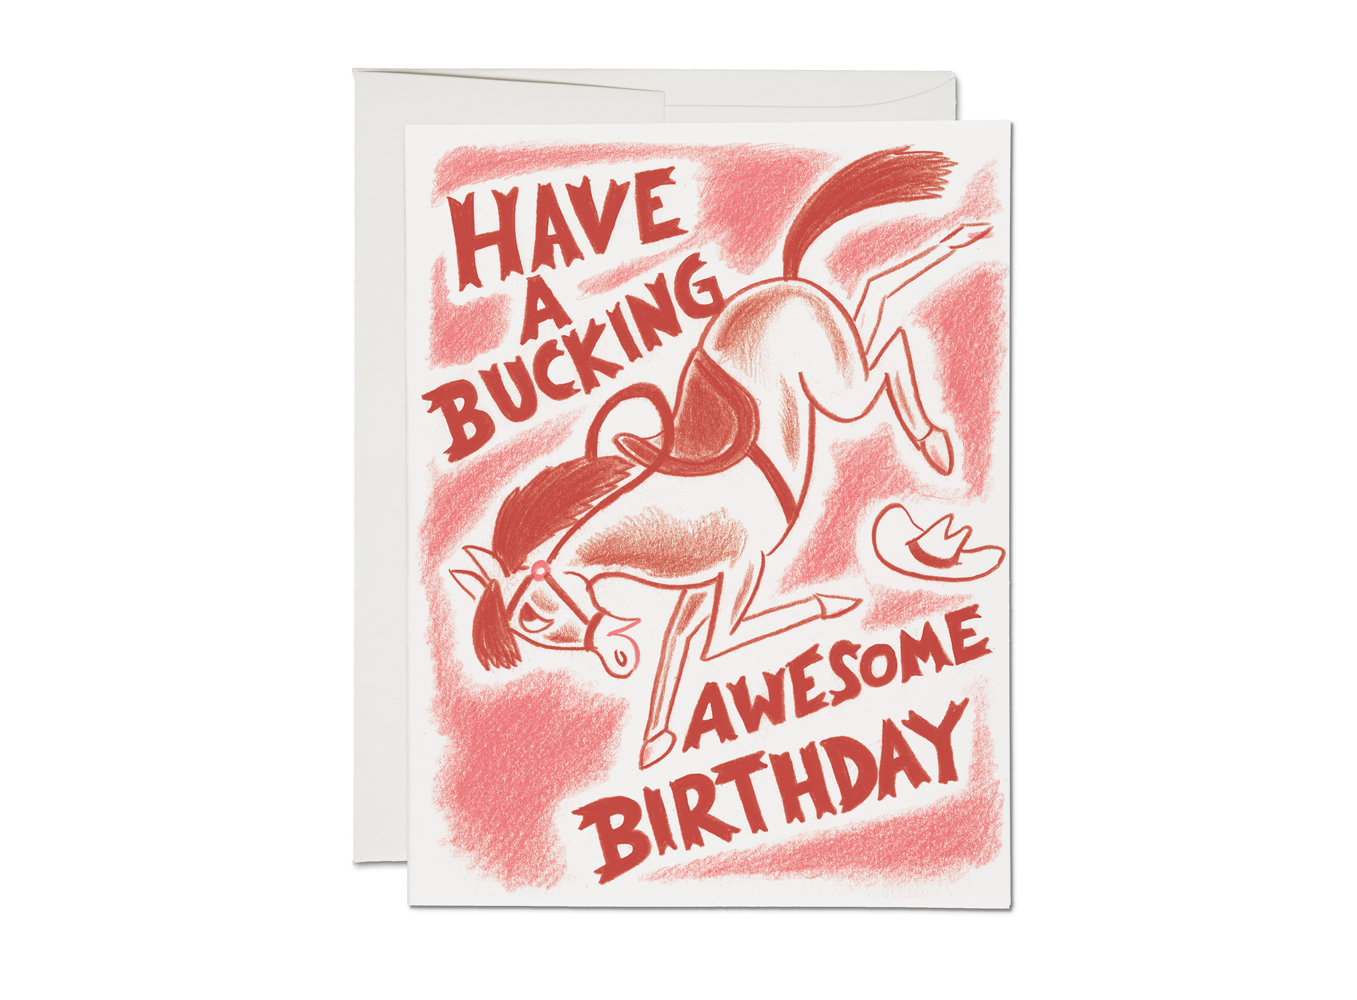 bucking-birthday-red-cap-cards